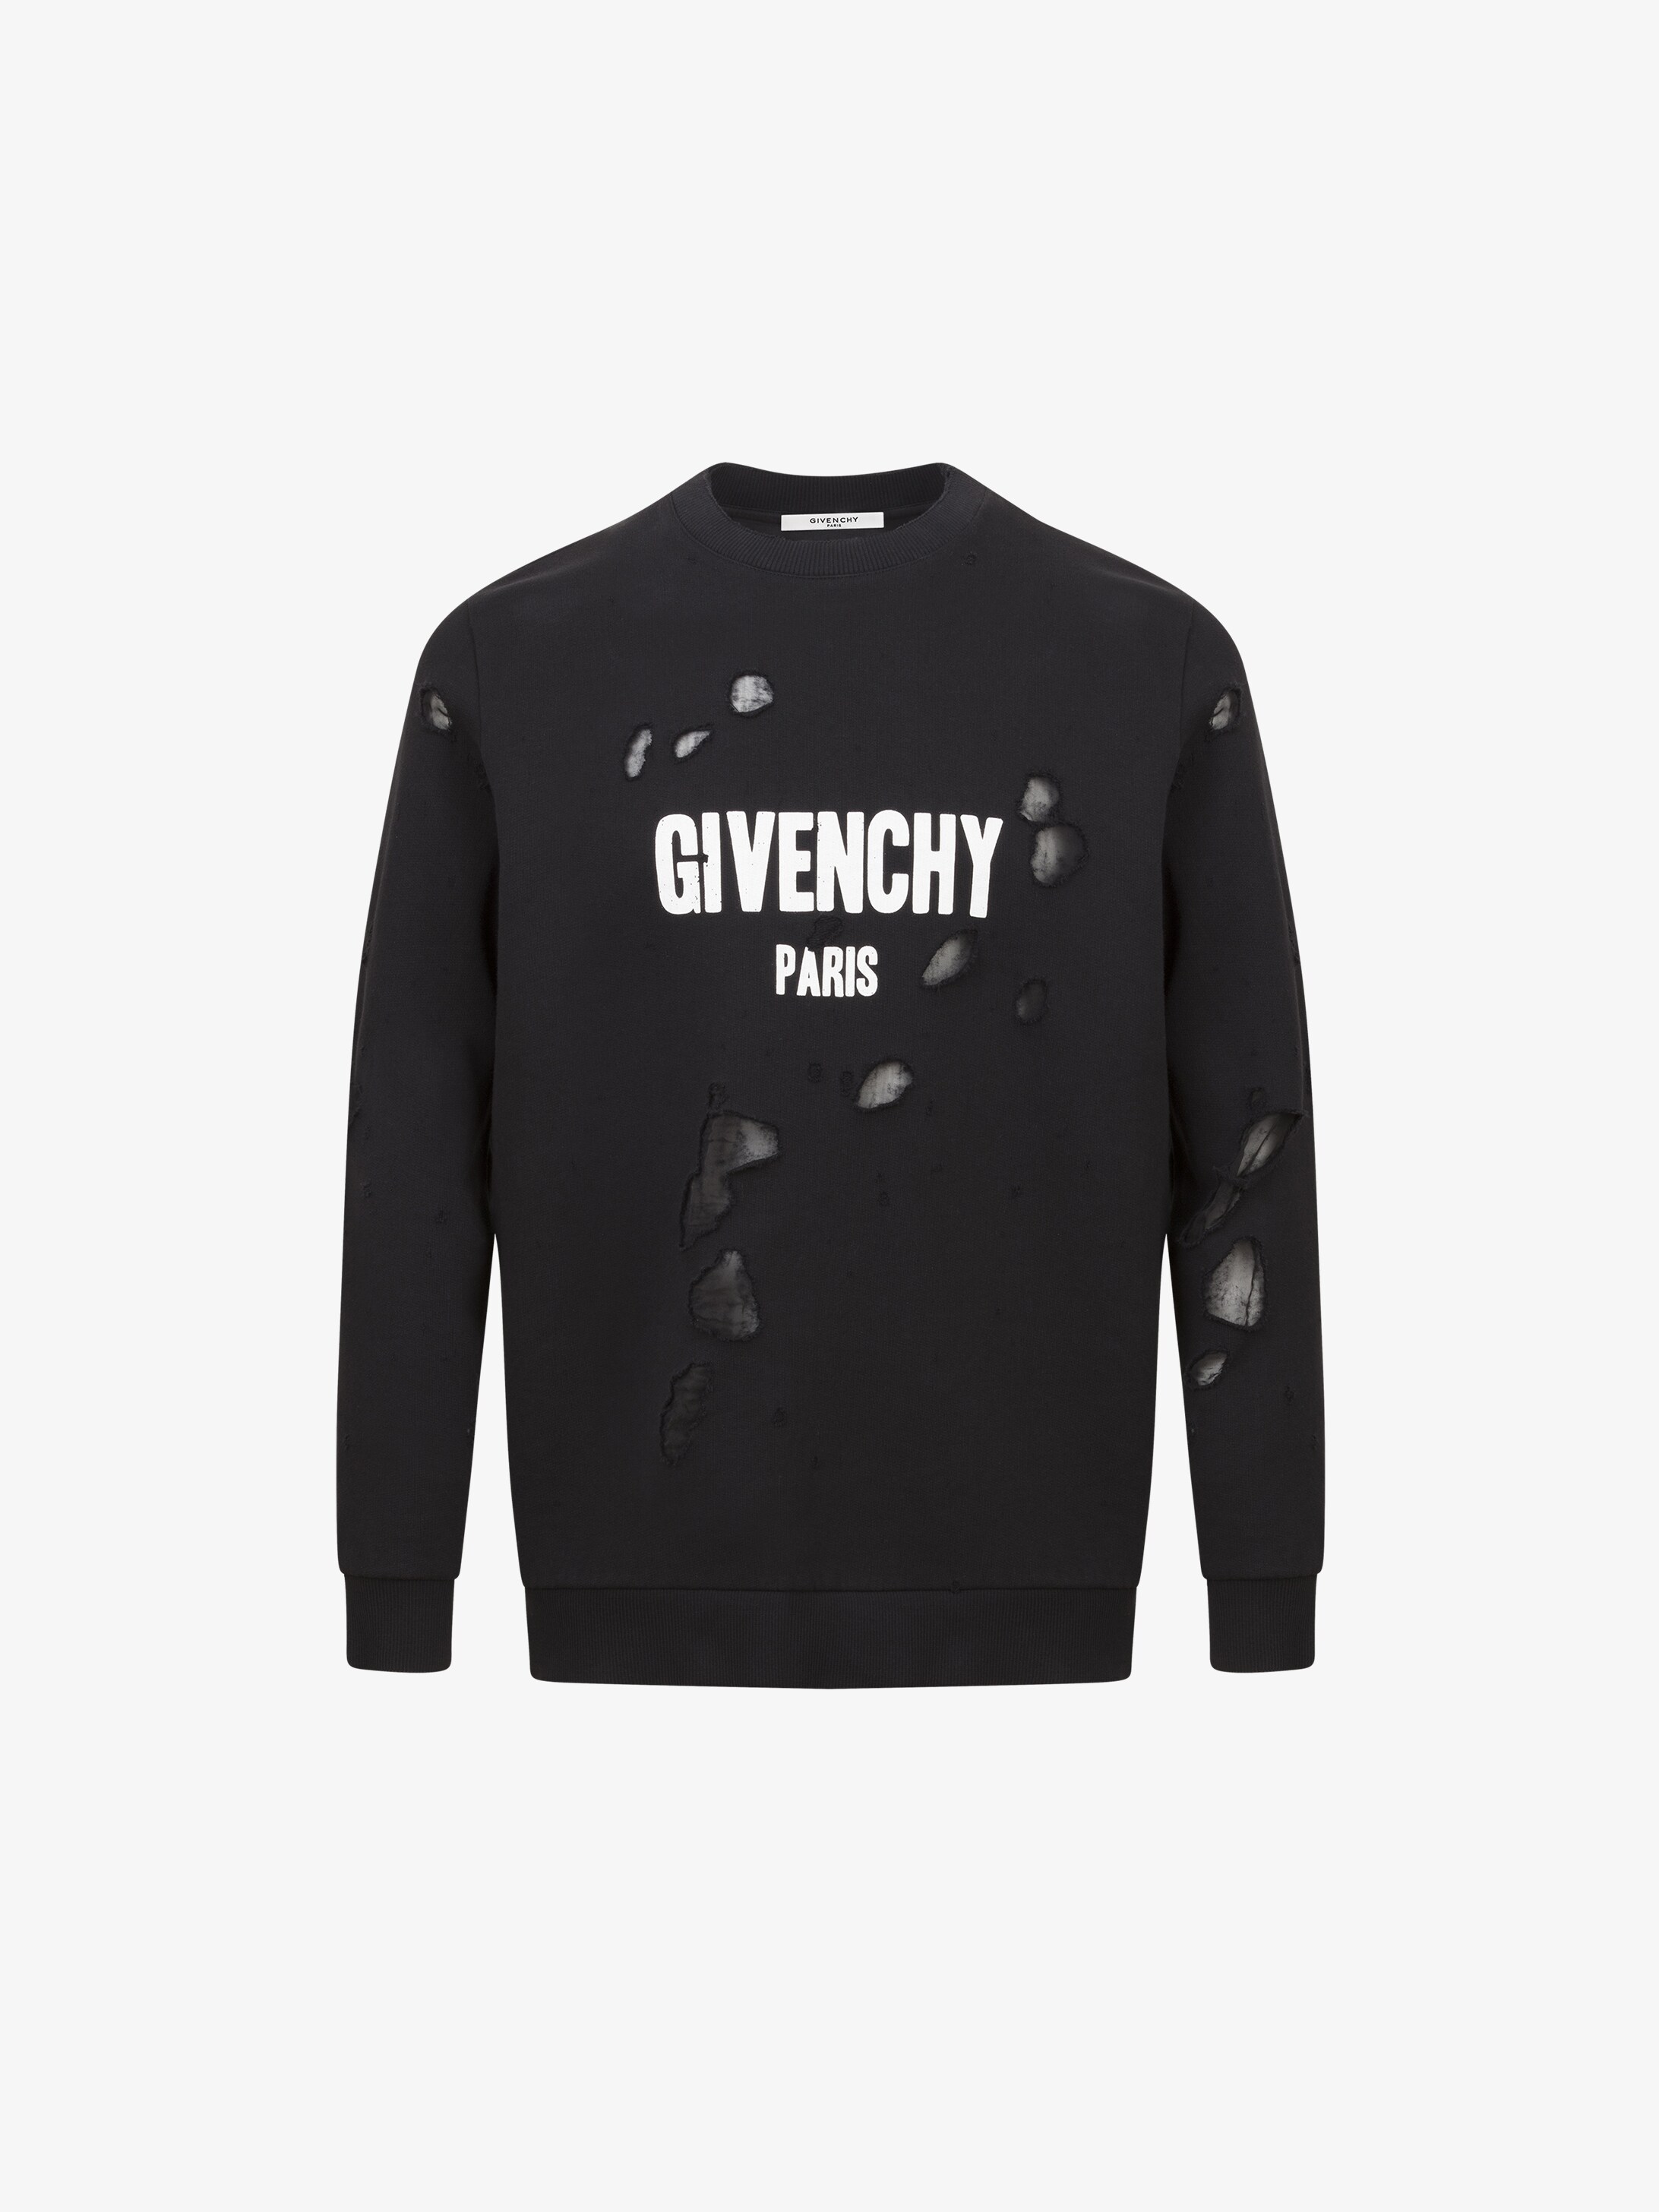 Givenchy PARIS destroyed sweatshirt 